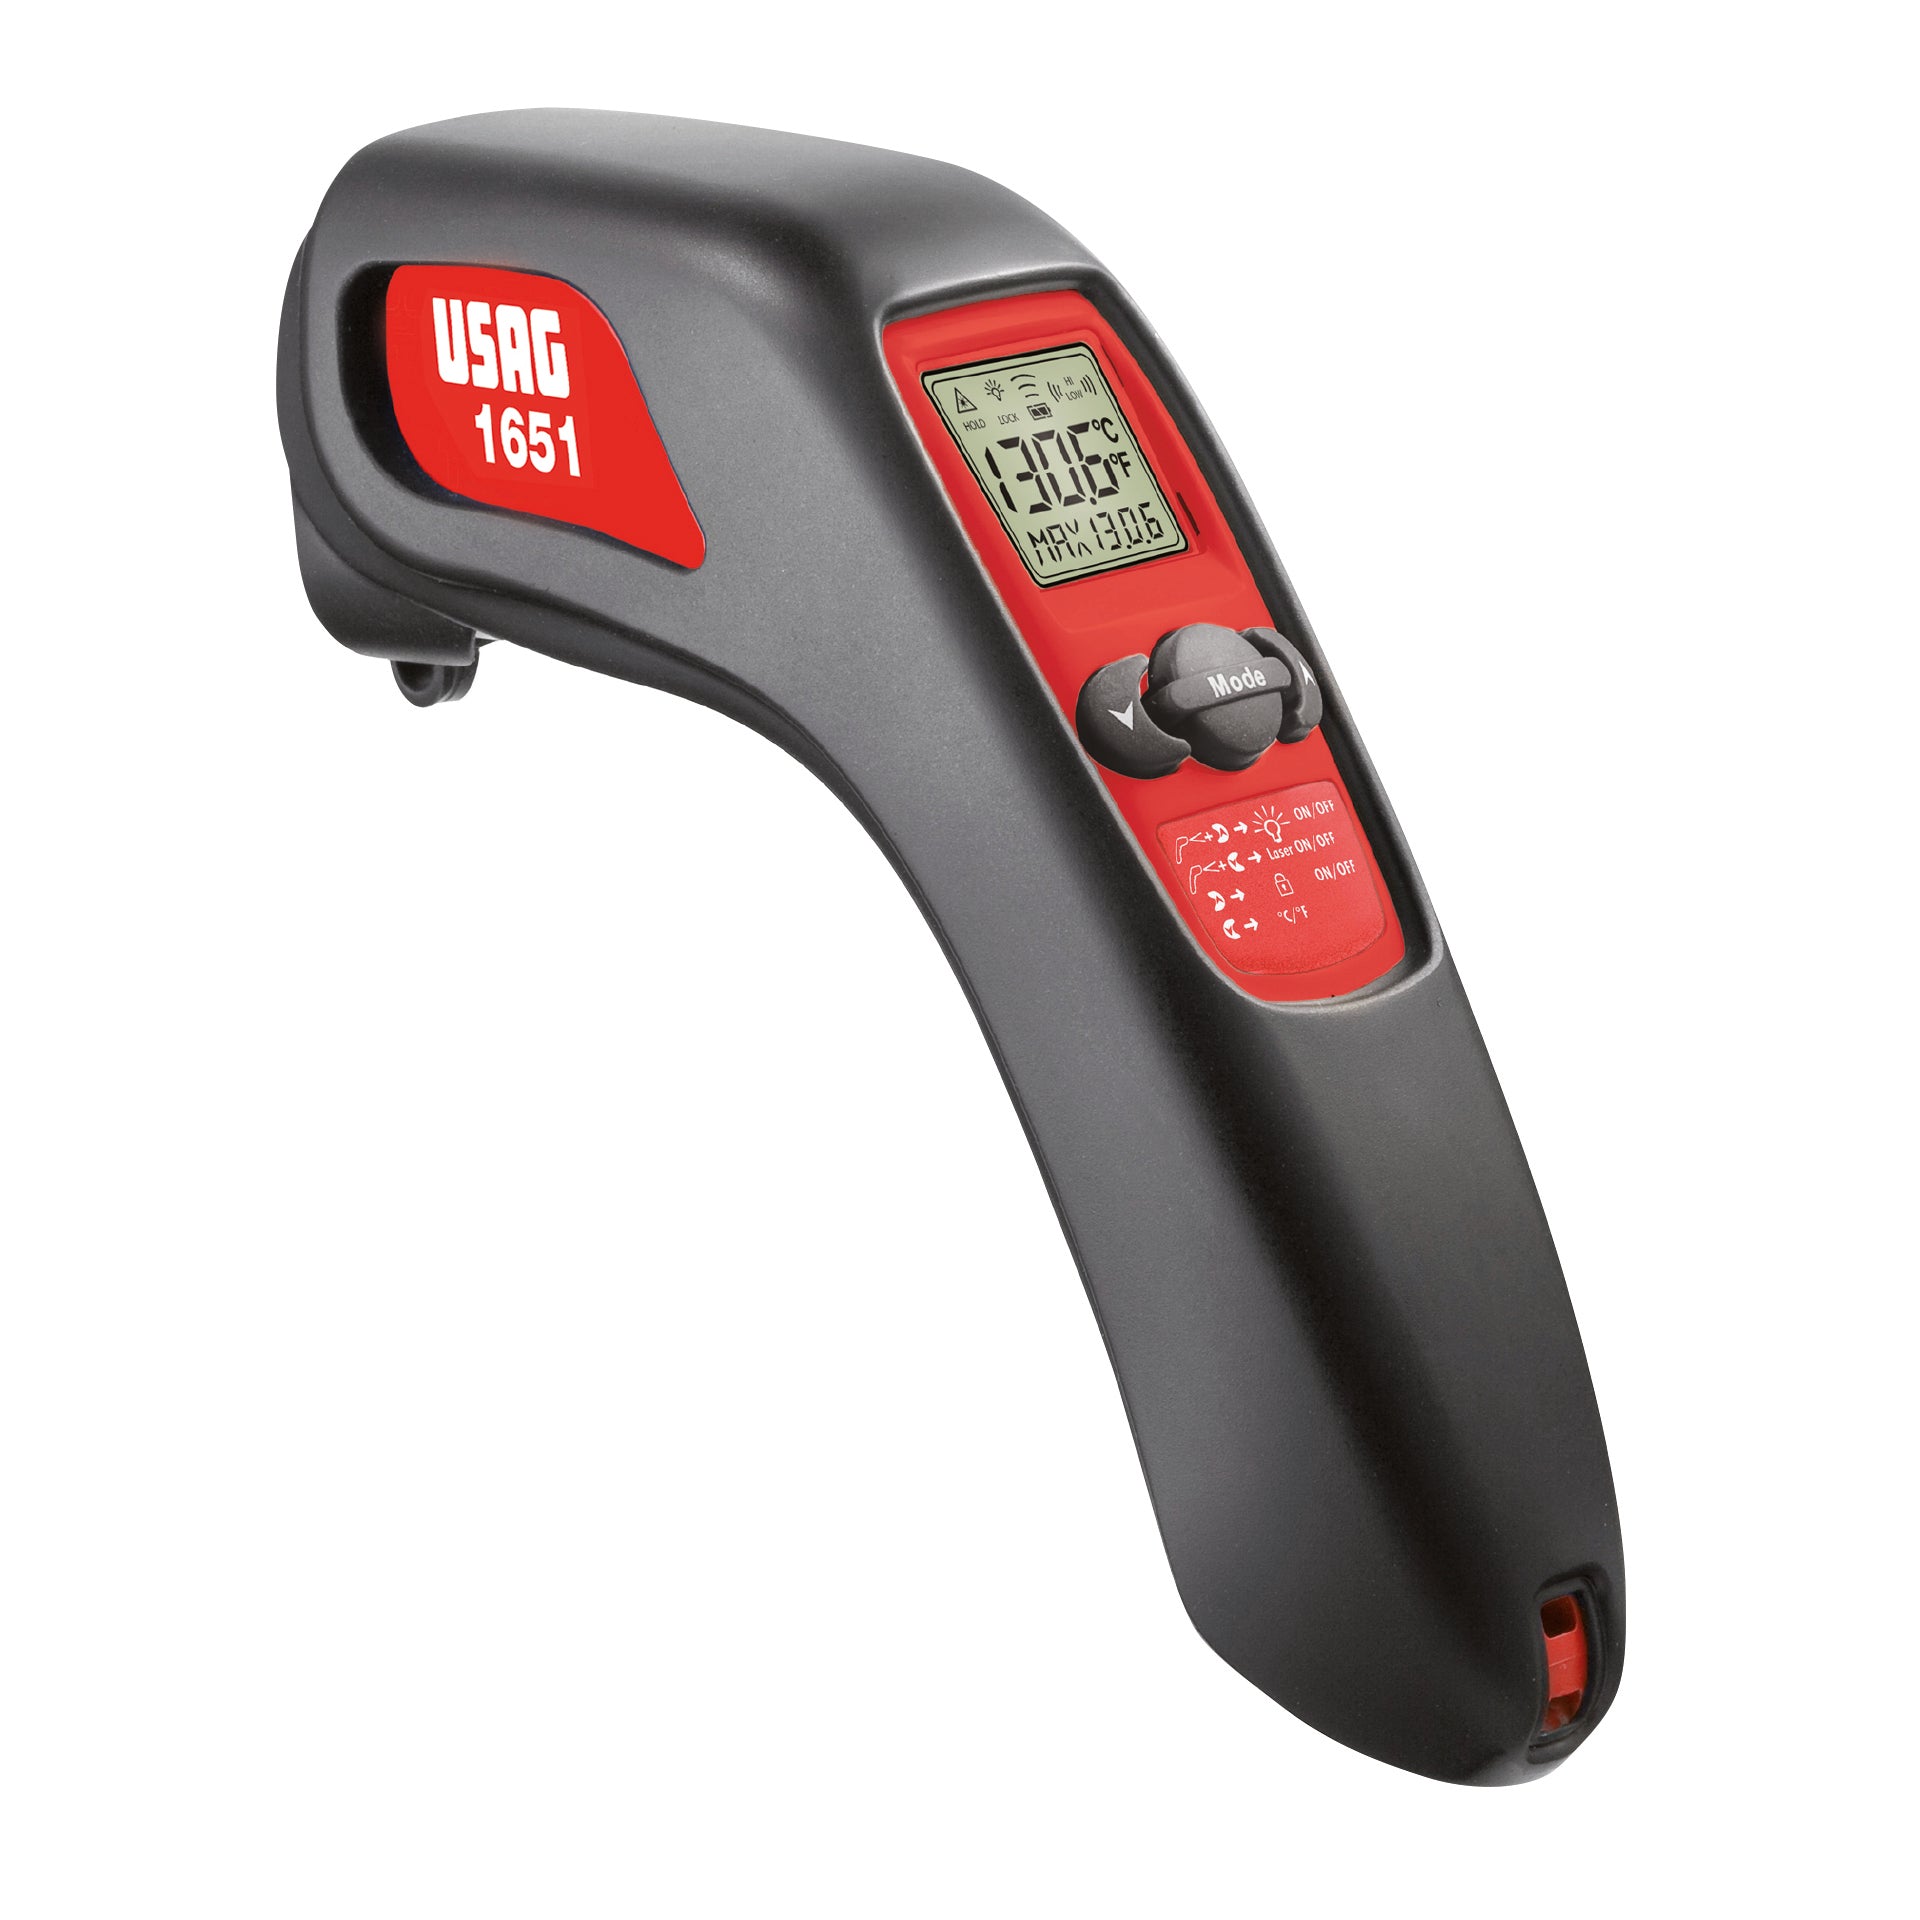 1651 - Termometro digitale ad infrarossi - Usag